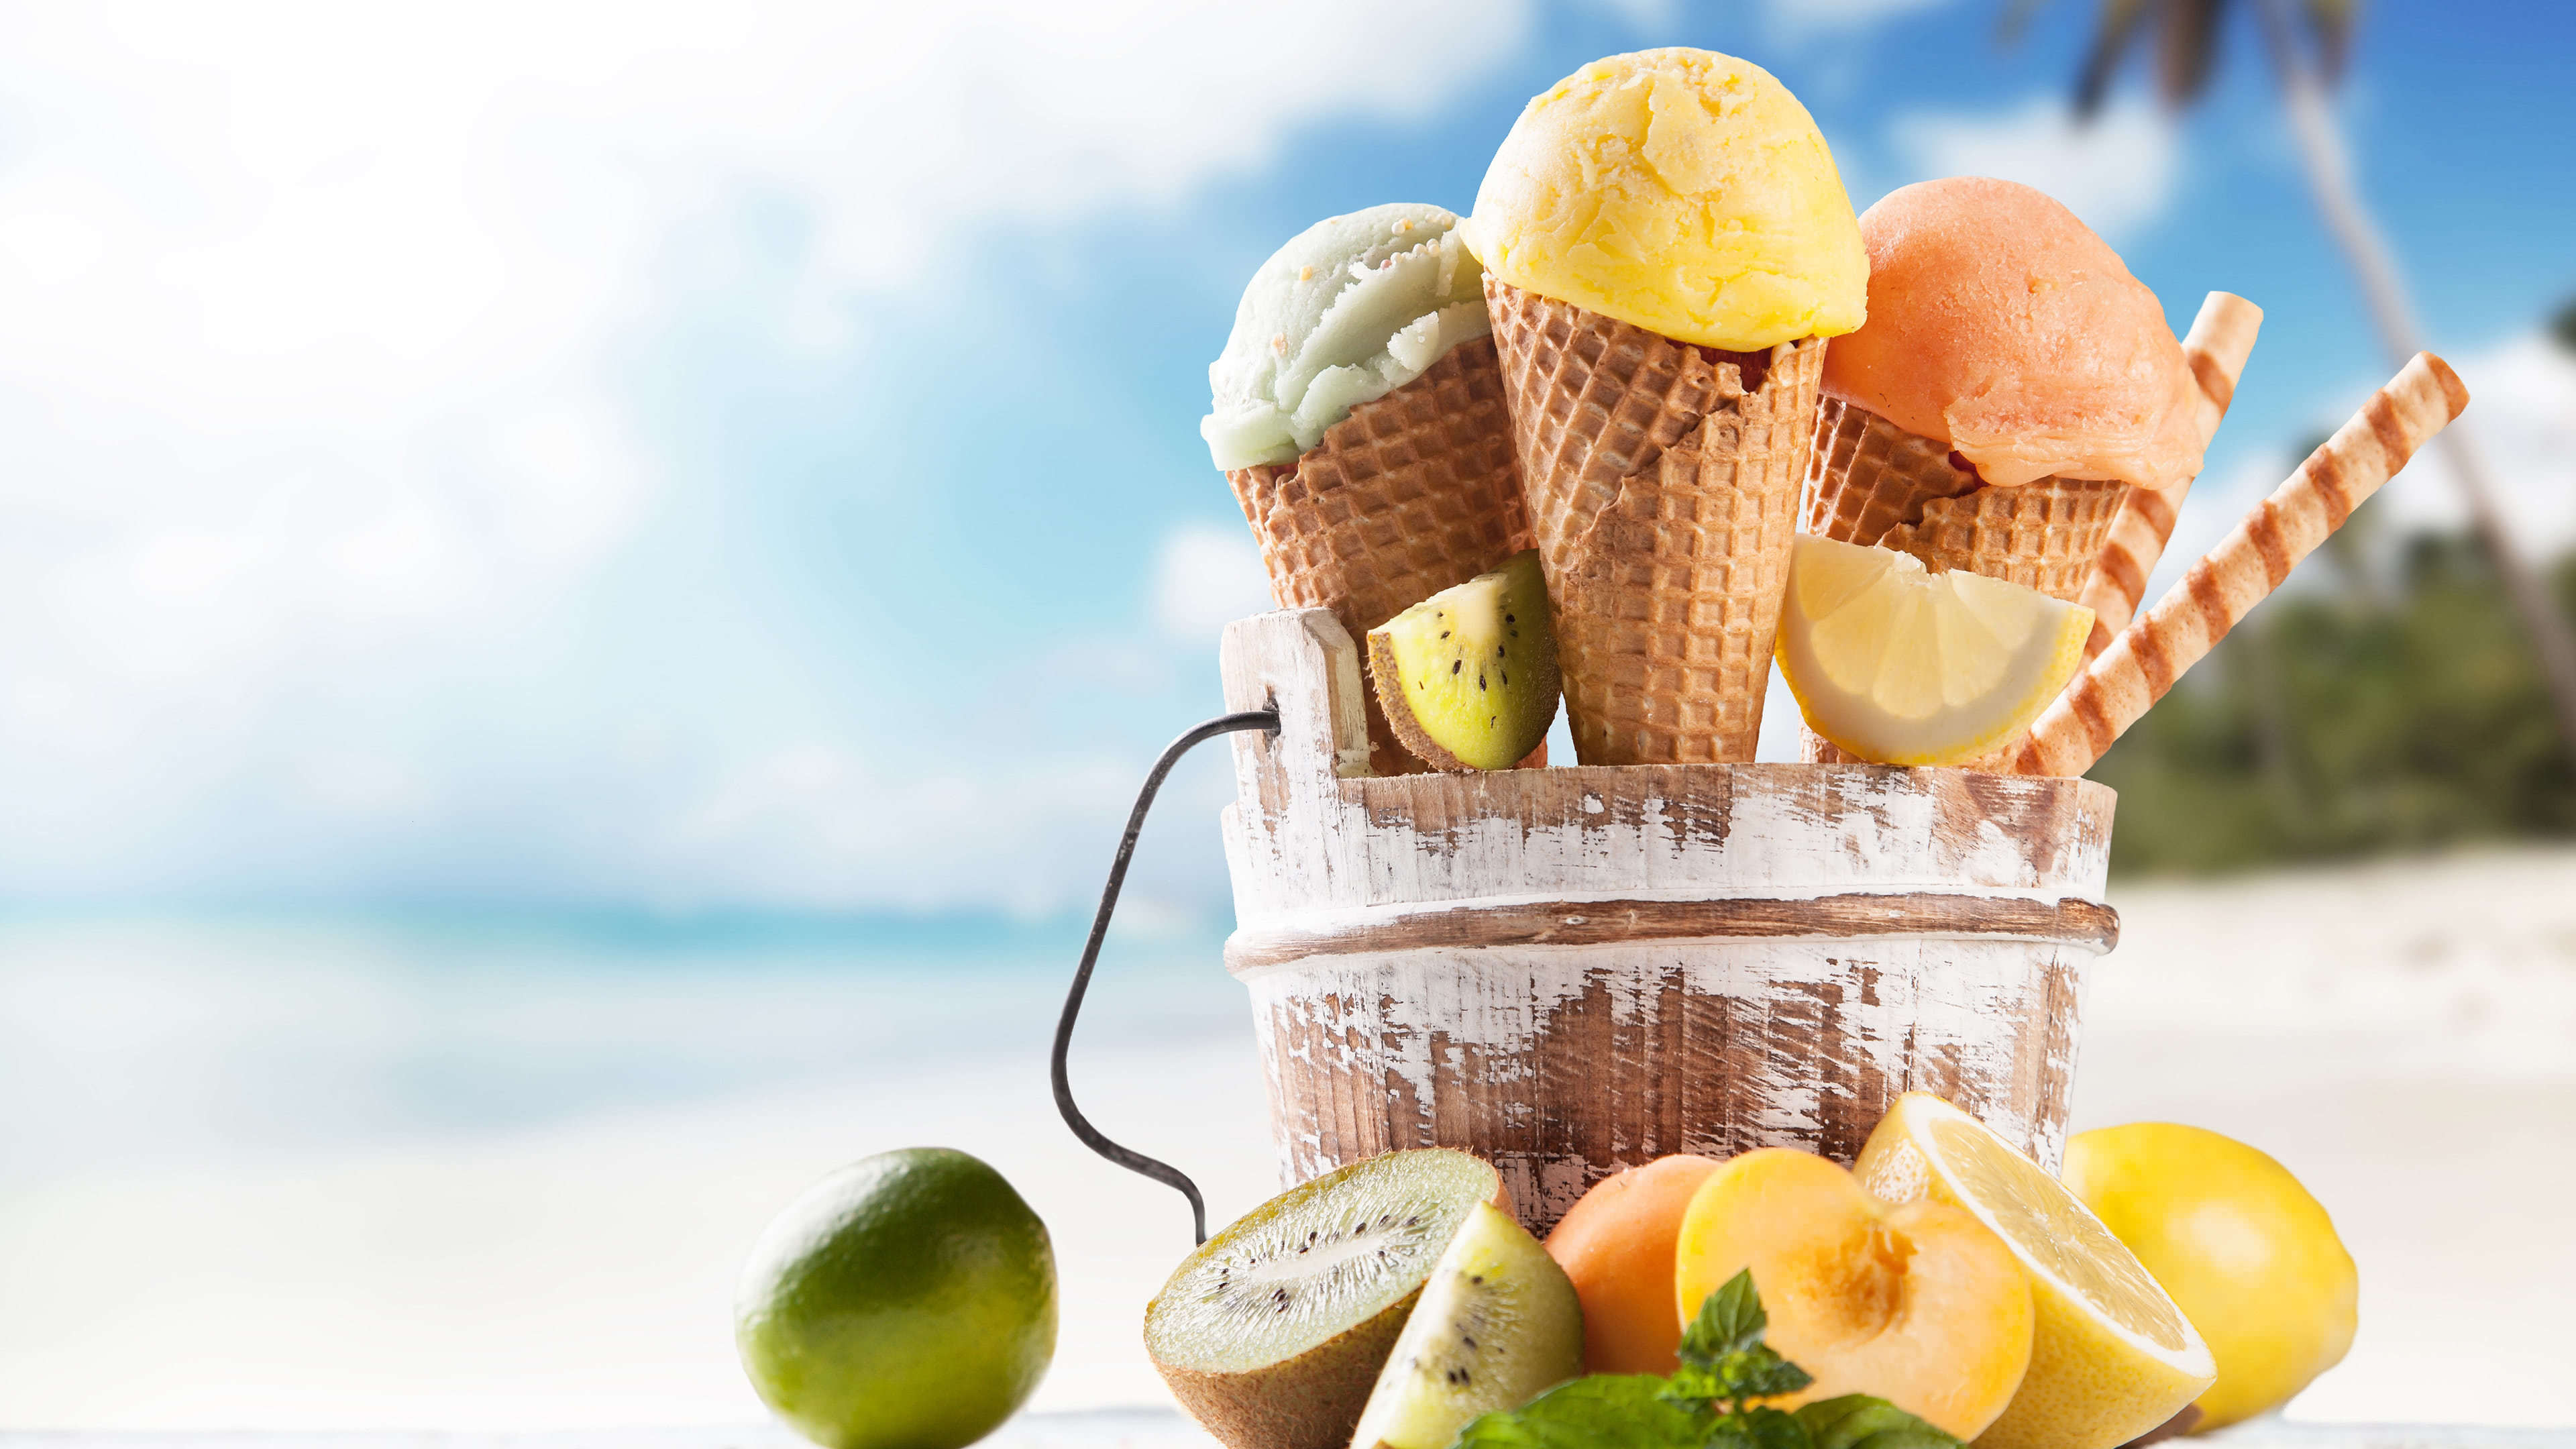 Ice Cream And Fruits On Beach UHD 4k Wallpaper